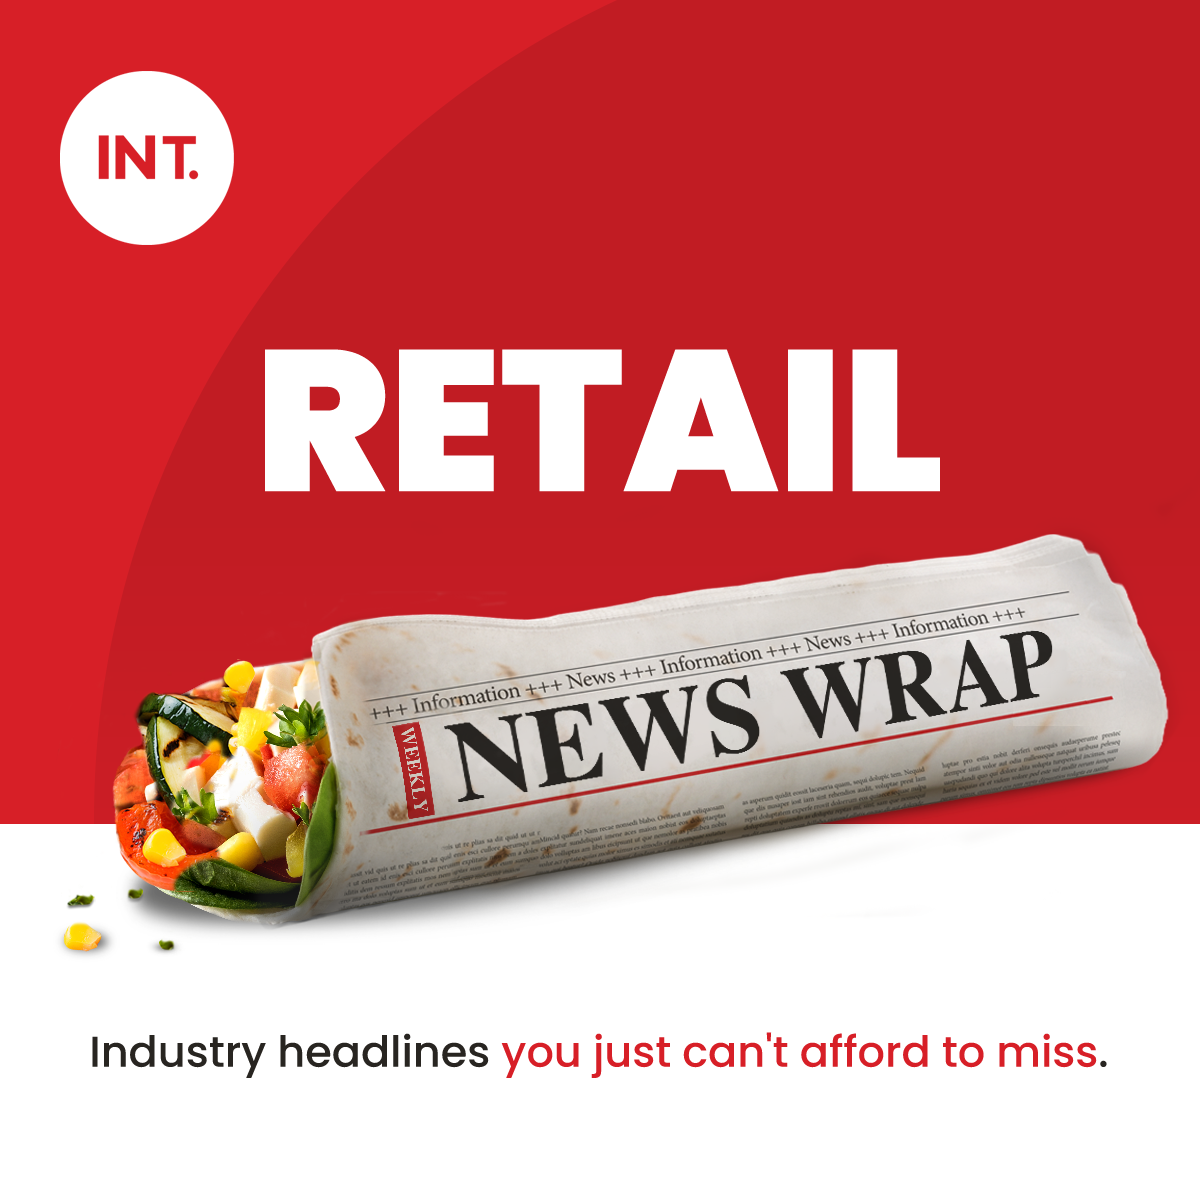 INT. news Wrap | Retail